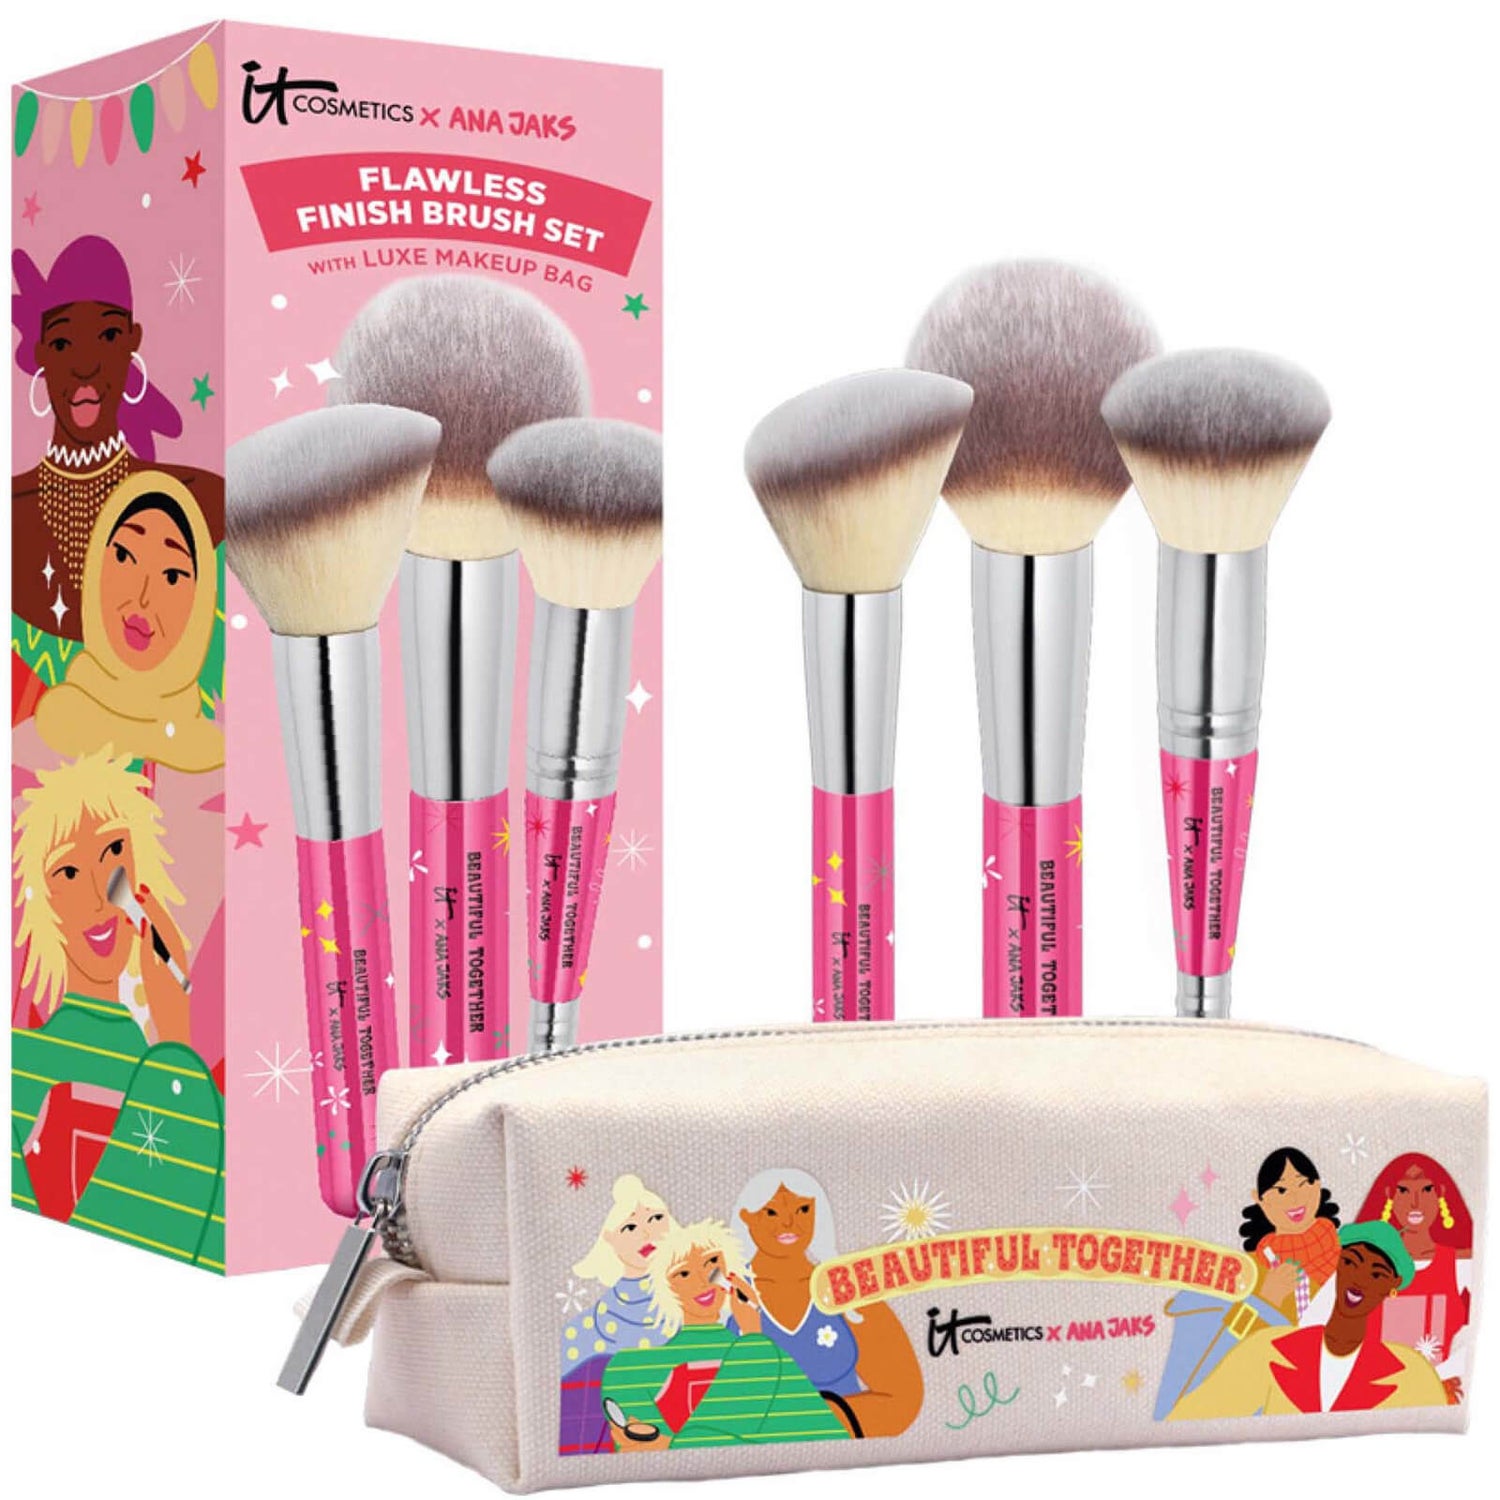 IT Cosmetics Beautiful Together Flawless Finish Brush Set